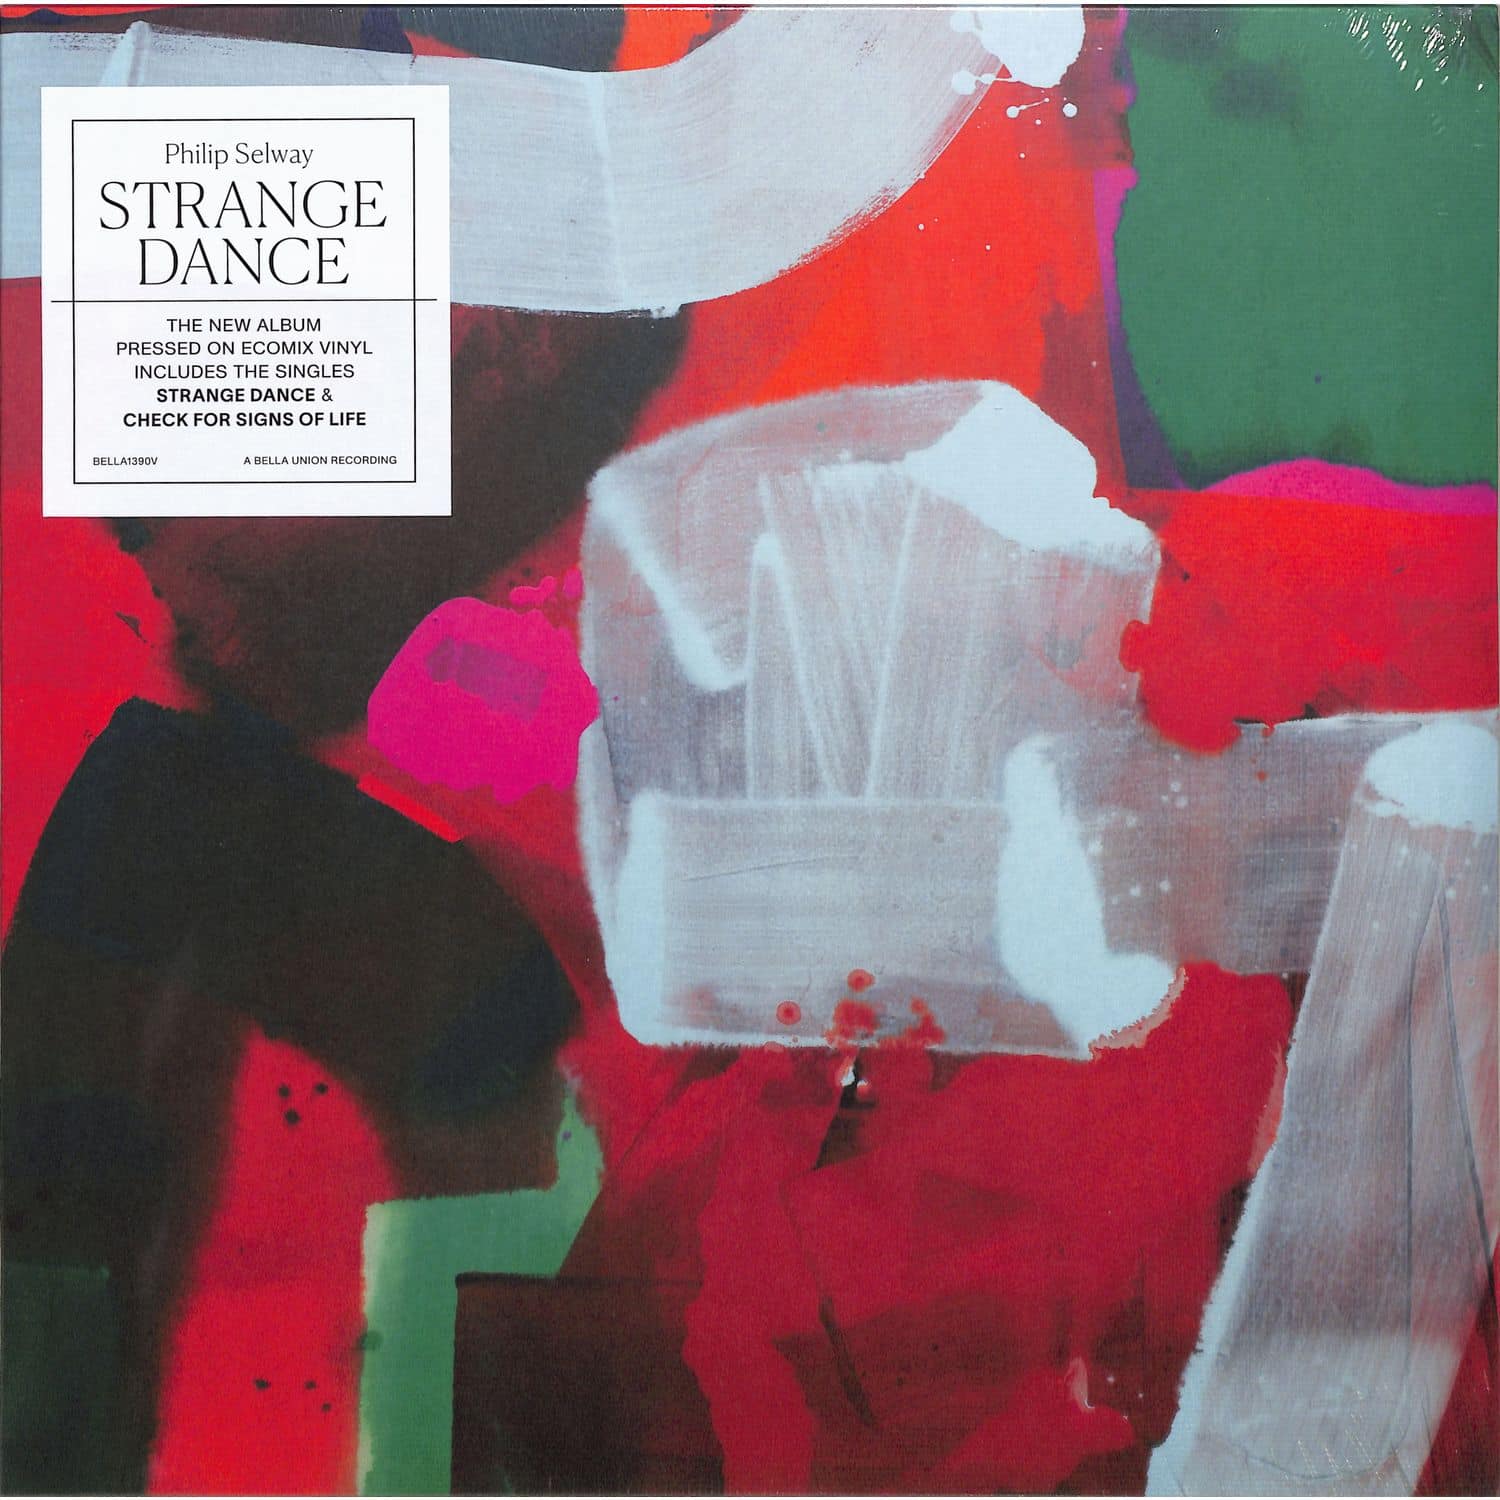 Philip Selway - STRANGE DANCE